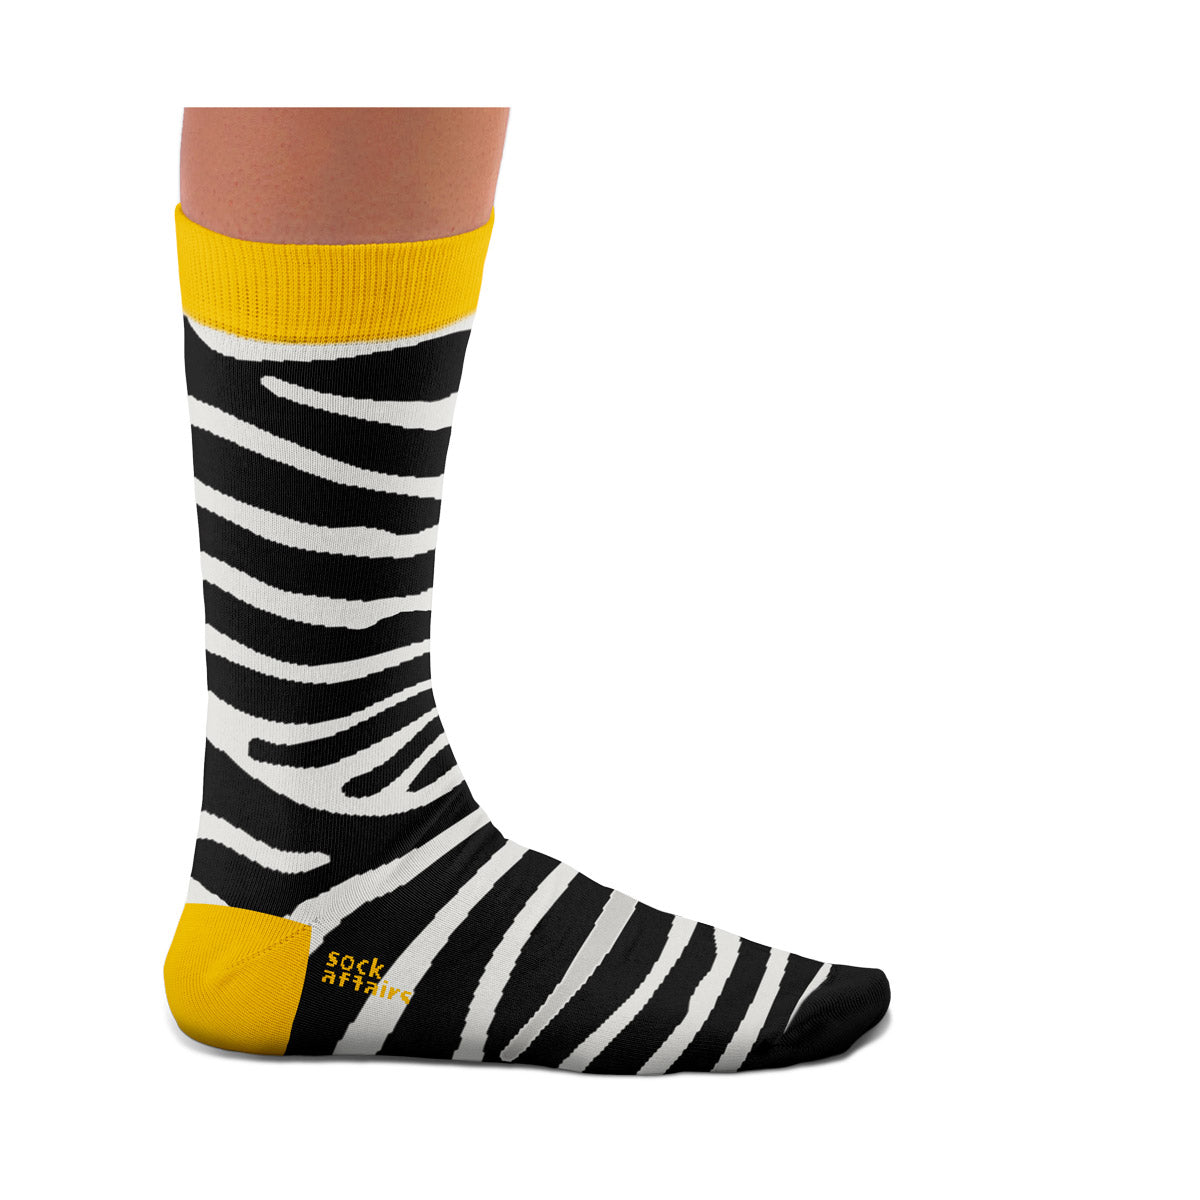 Sock Affairs, Zebra Socks